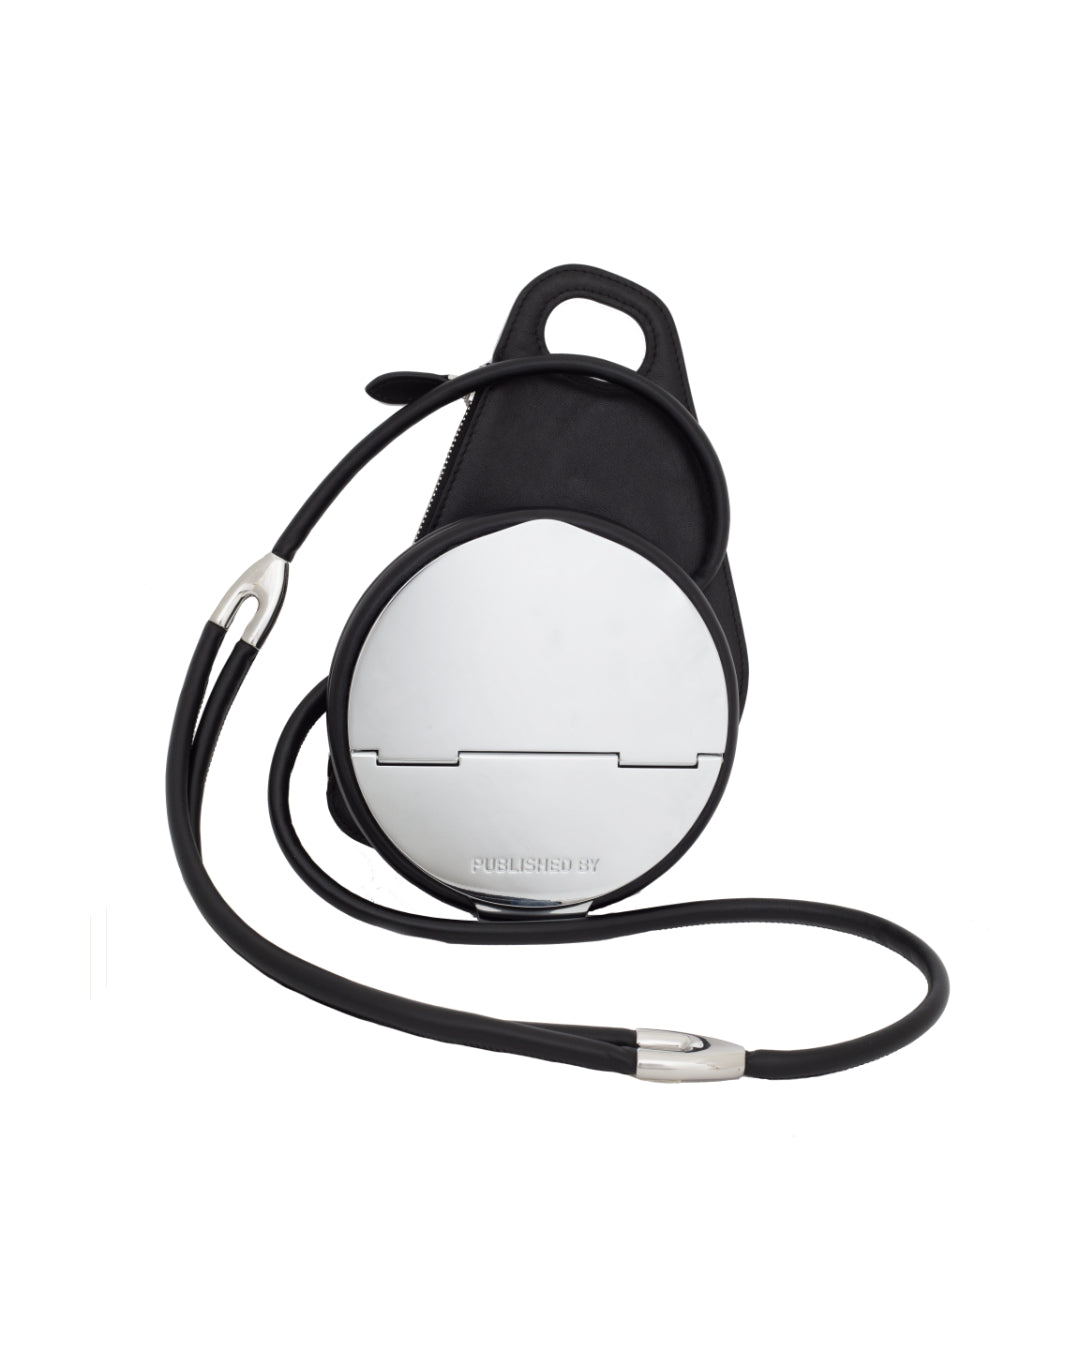 Circle Harness Bag with Basic Harness